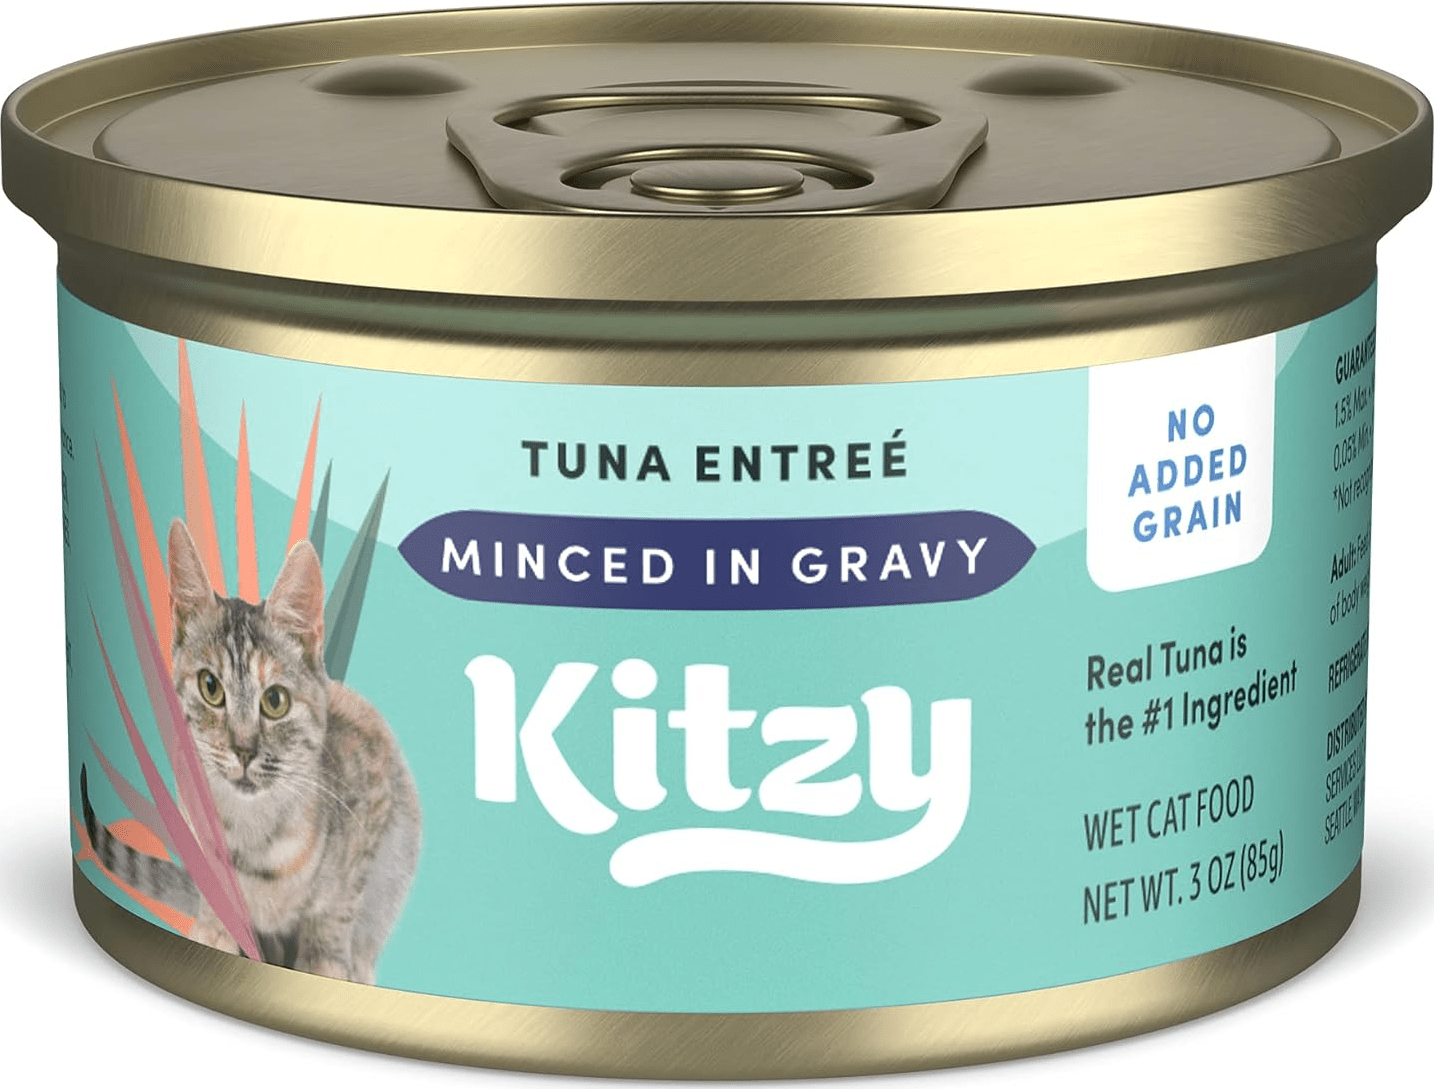 Kitzy Tuna Entree